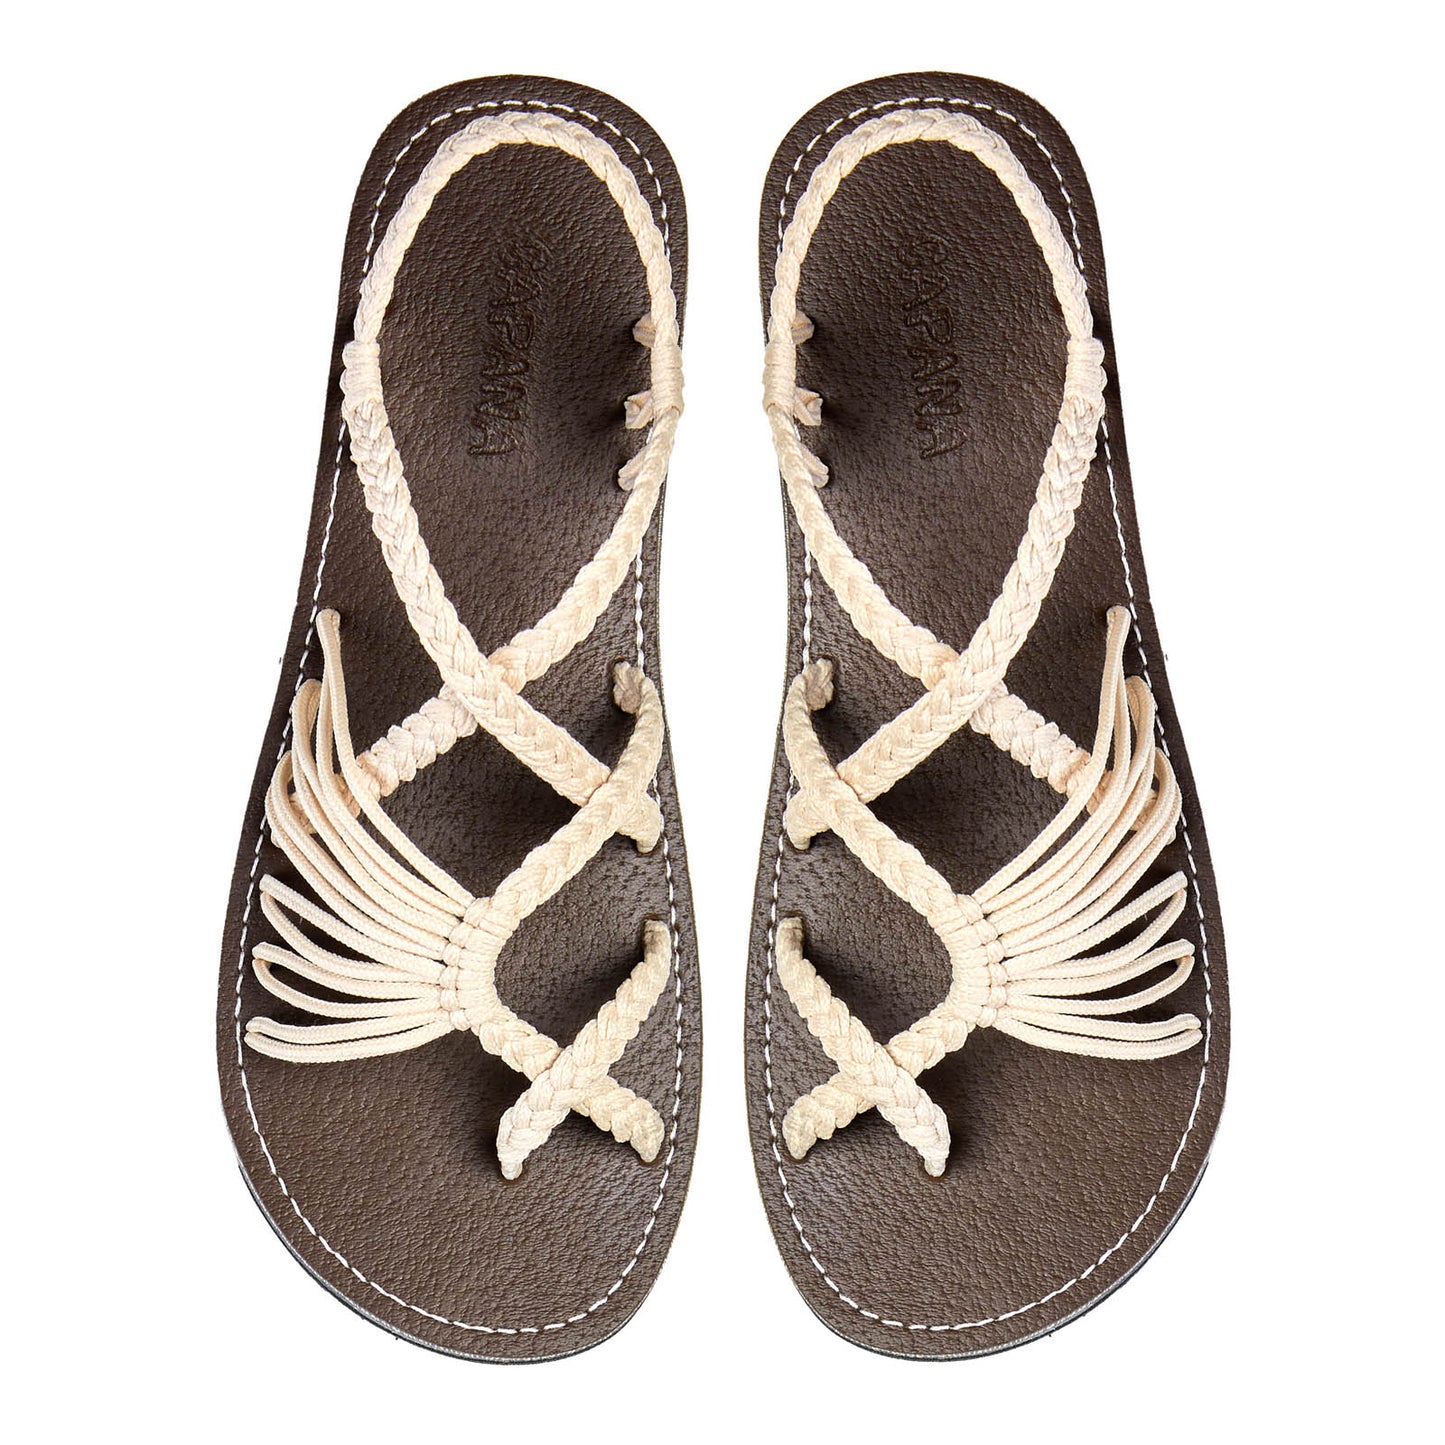 Banyan Natural Rope sandals - Crisscross design